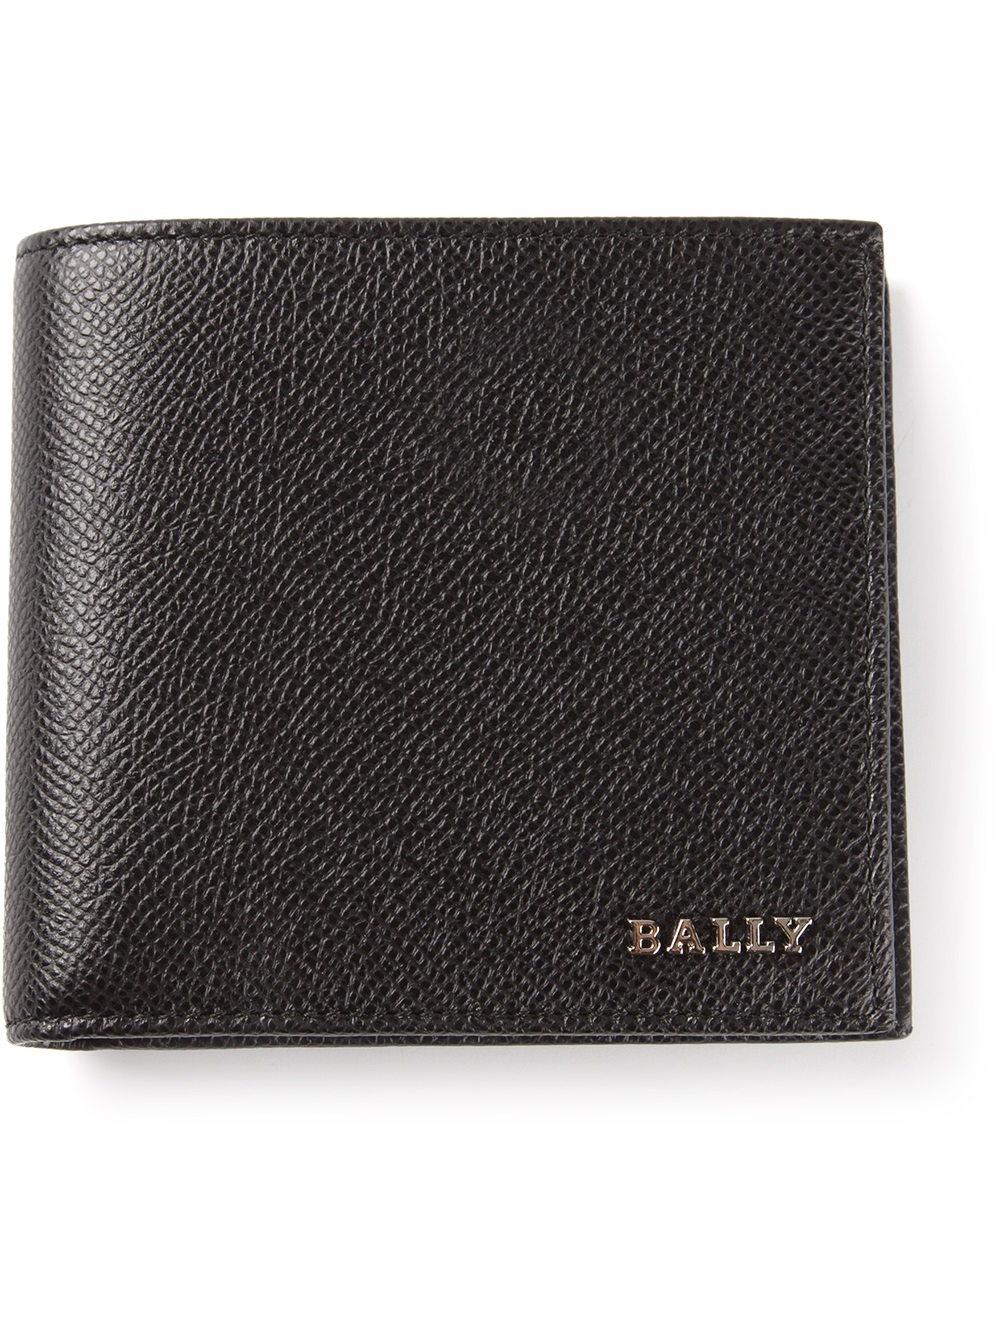 Lyst - Bally Logo Detail Leather Wallet in Black for Men